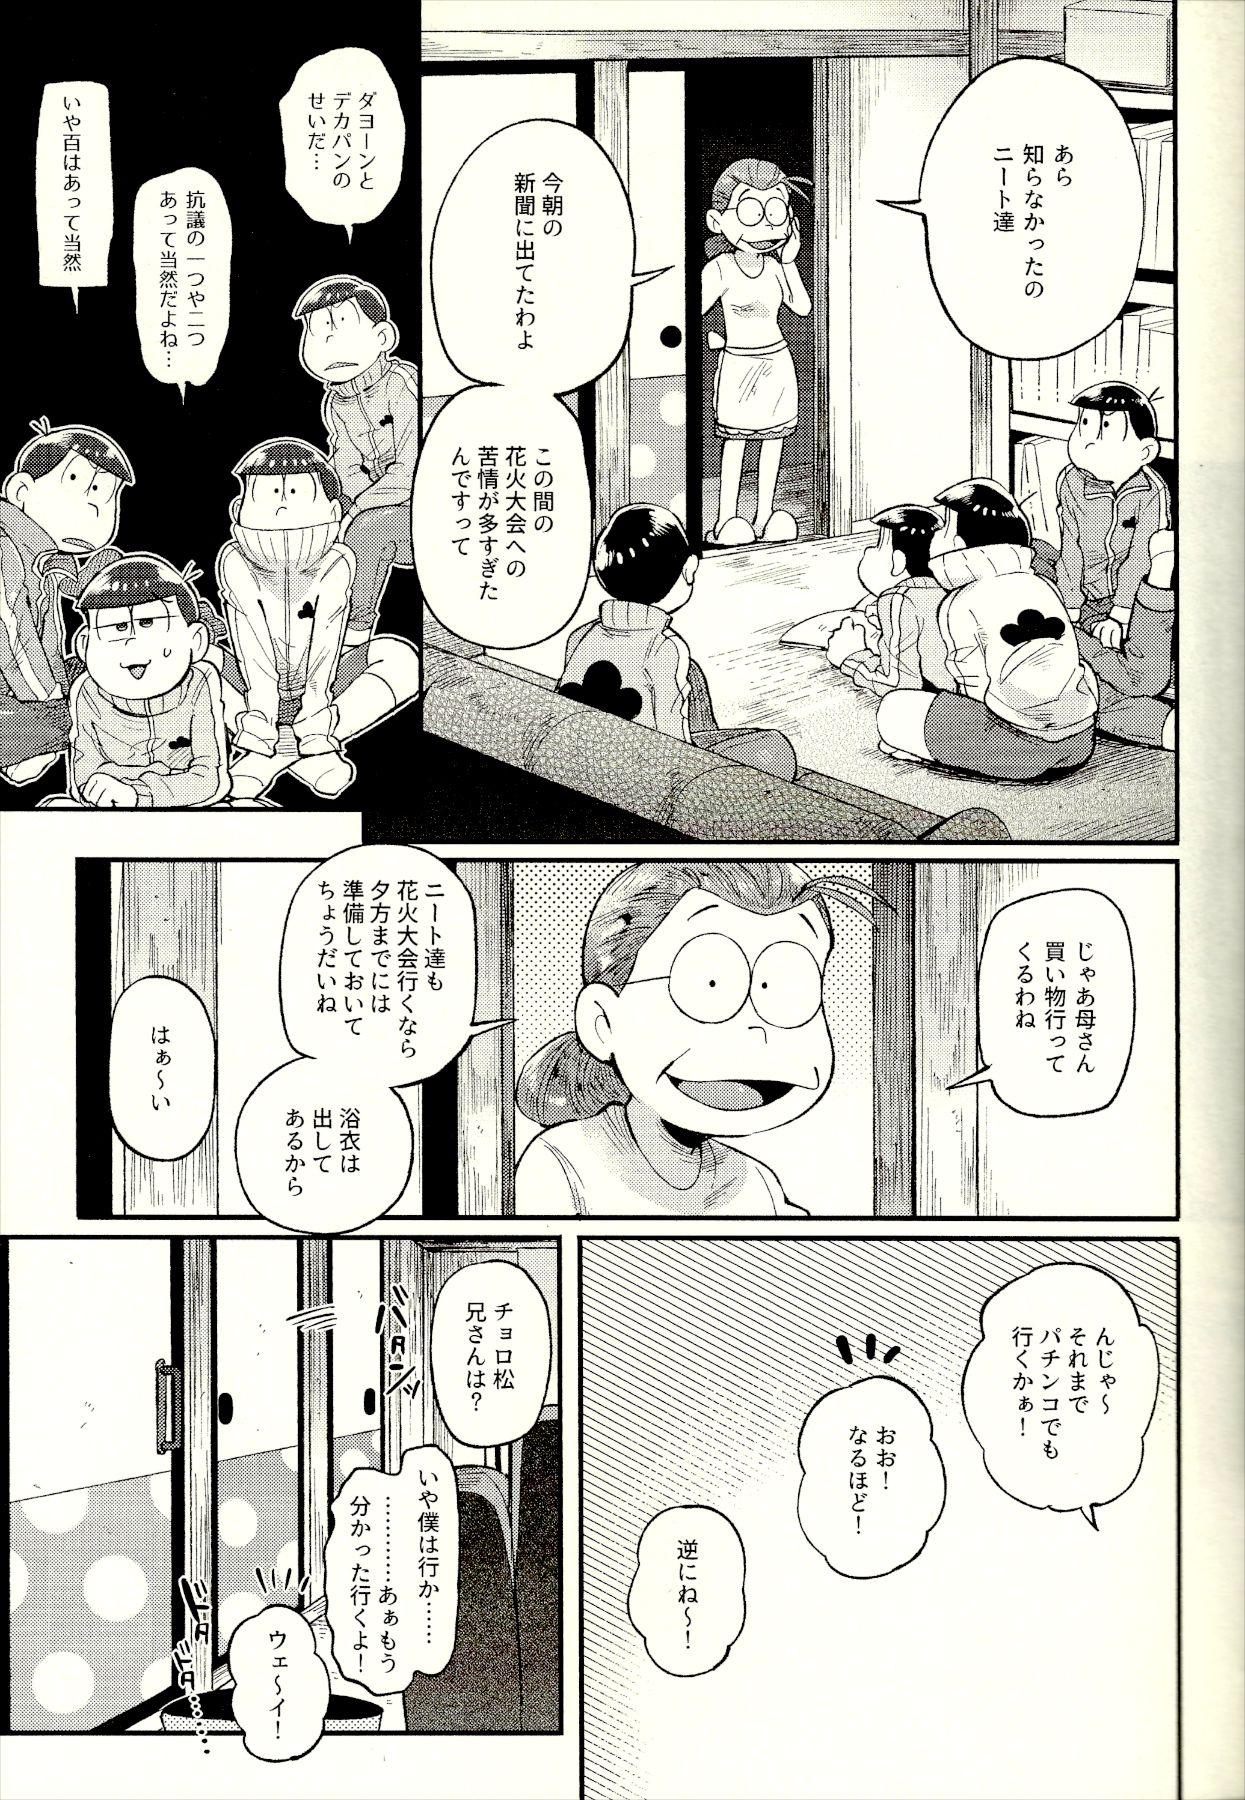 Japanese Season in the Summer - Osomatsu-san Real Couple - Page 5